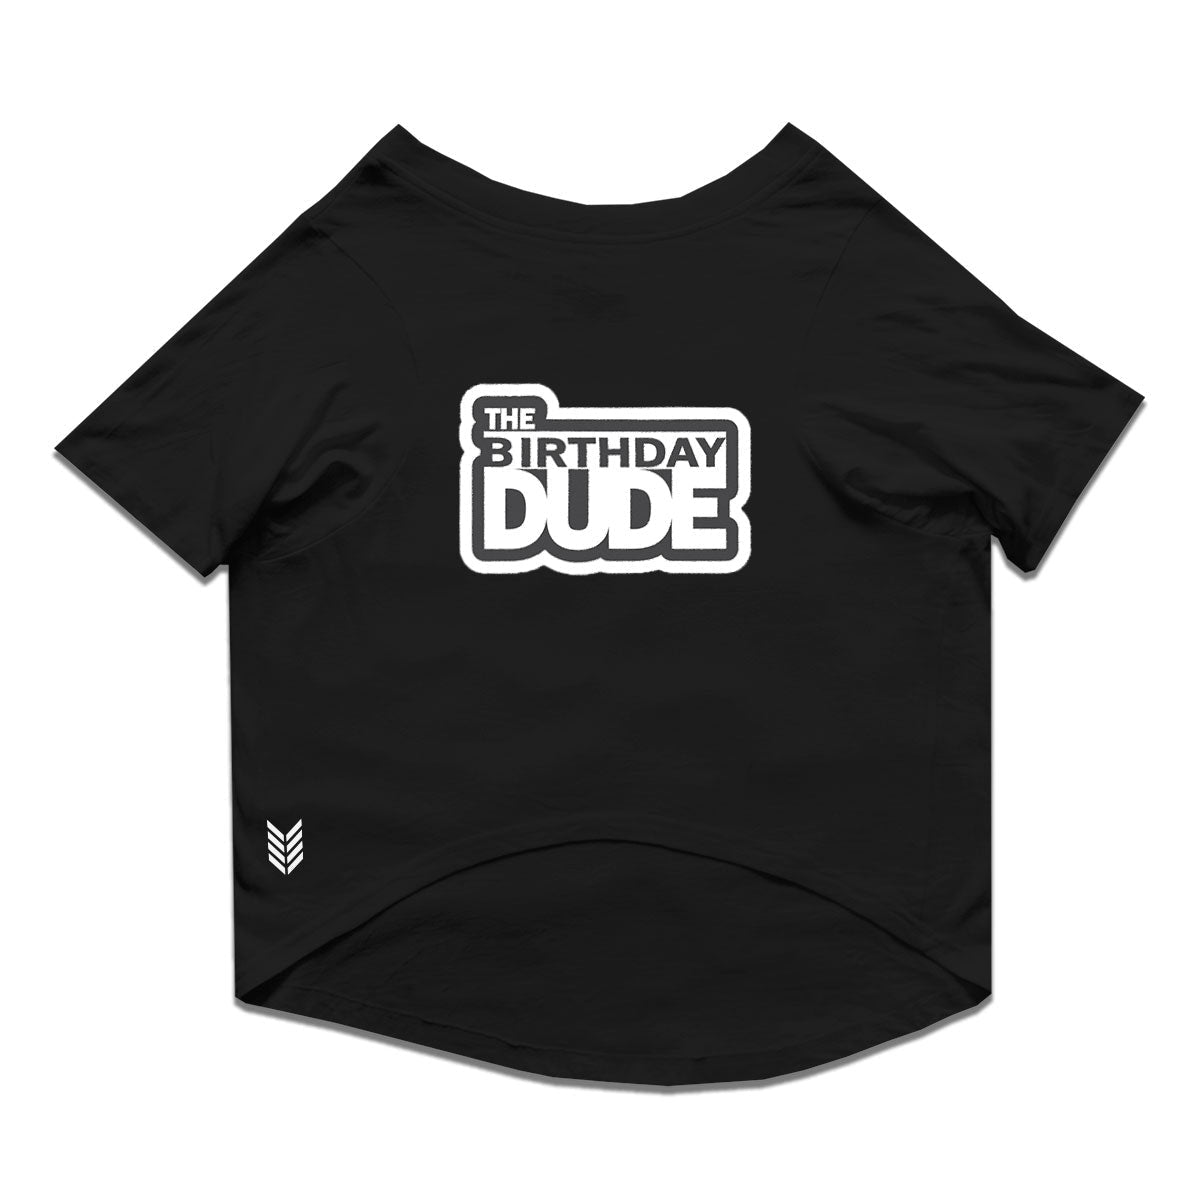 Ruse / Black Ruse Basic Crew Neck 'The Birthday Dude' Printed Half Sleeves Dog Tee16